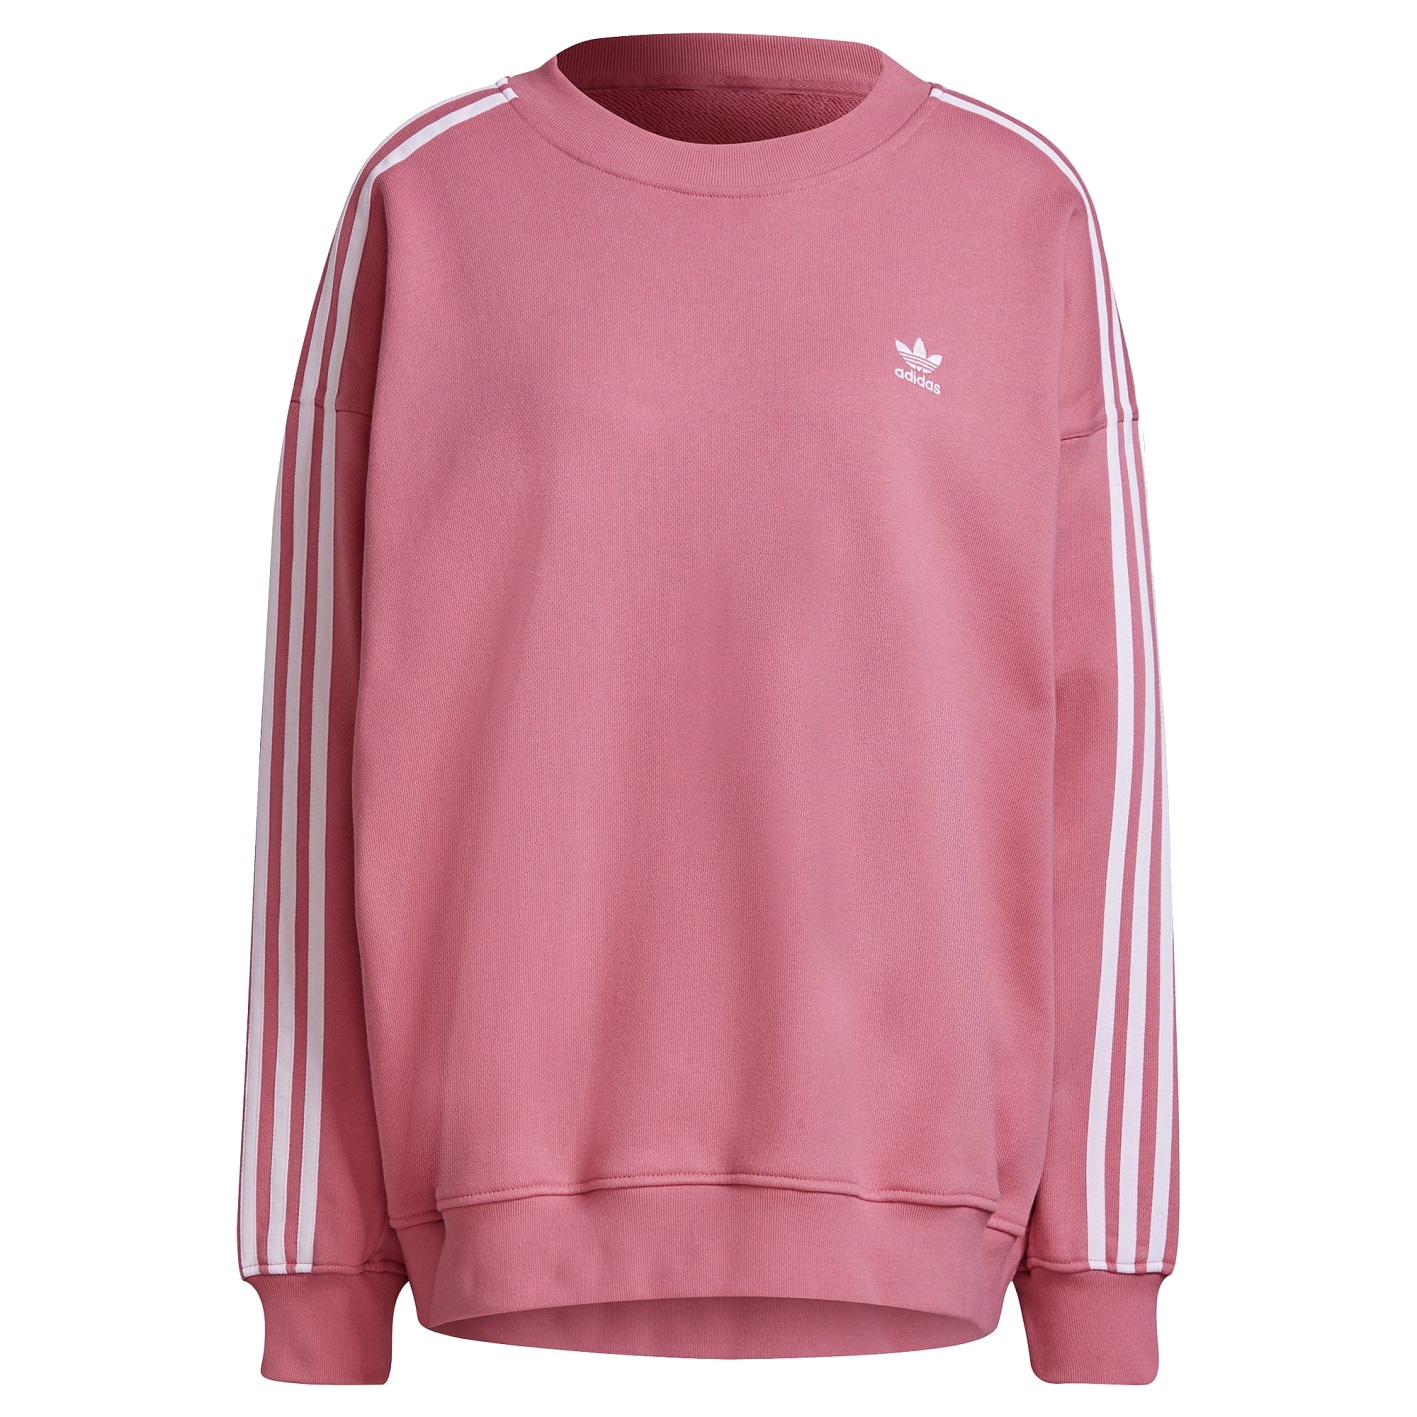 ☆ Adidas Oversized Damen Sweatshirt rosa - hier bestellen!